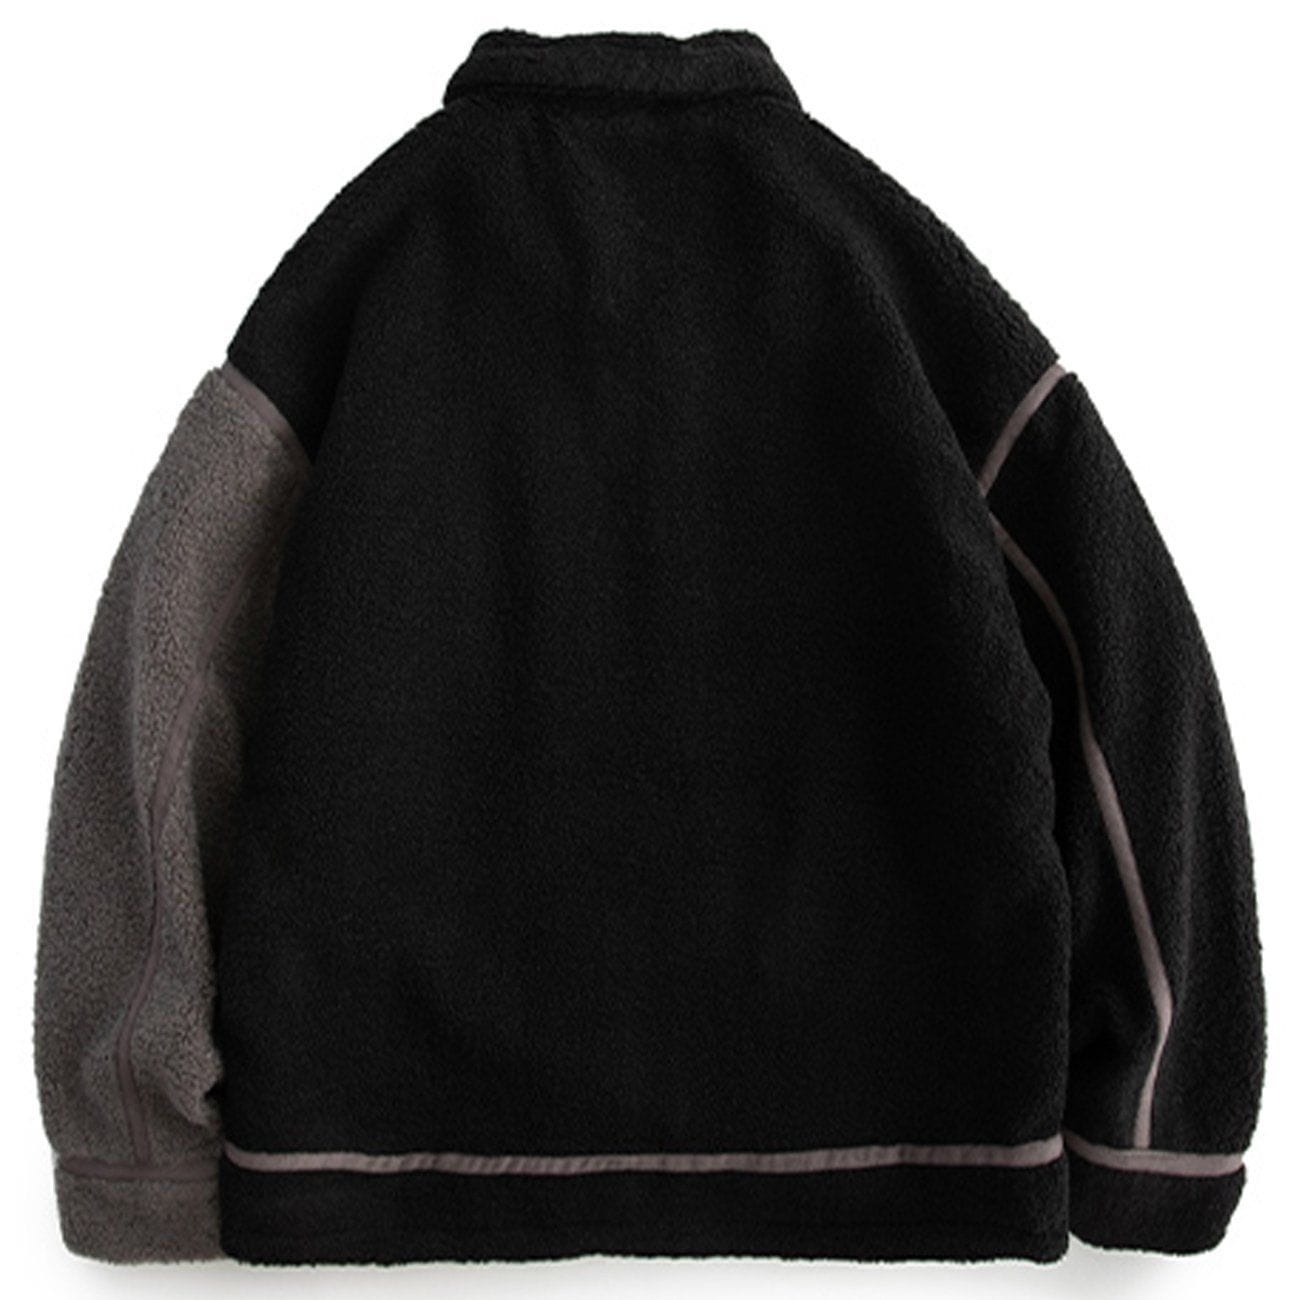 Sneakerland™ - Stitching Stripes Sherpa Winter Coat